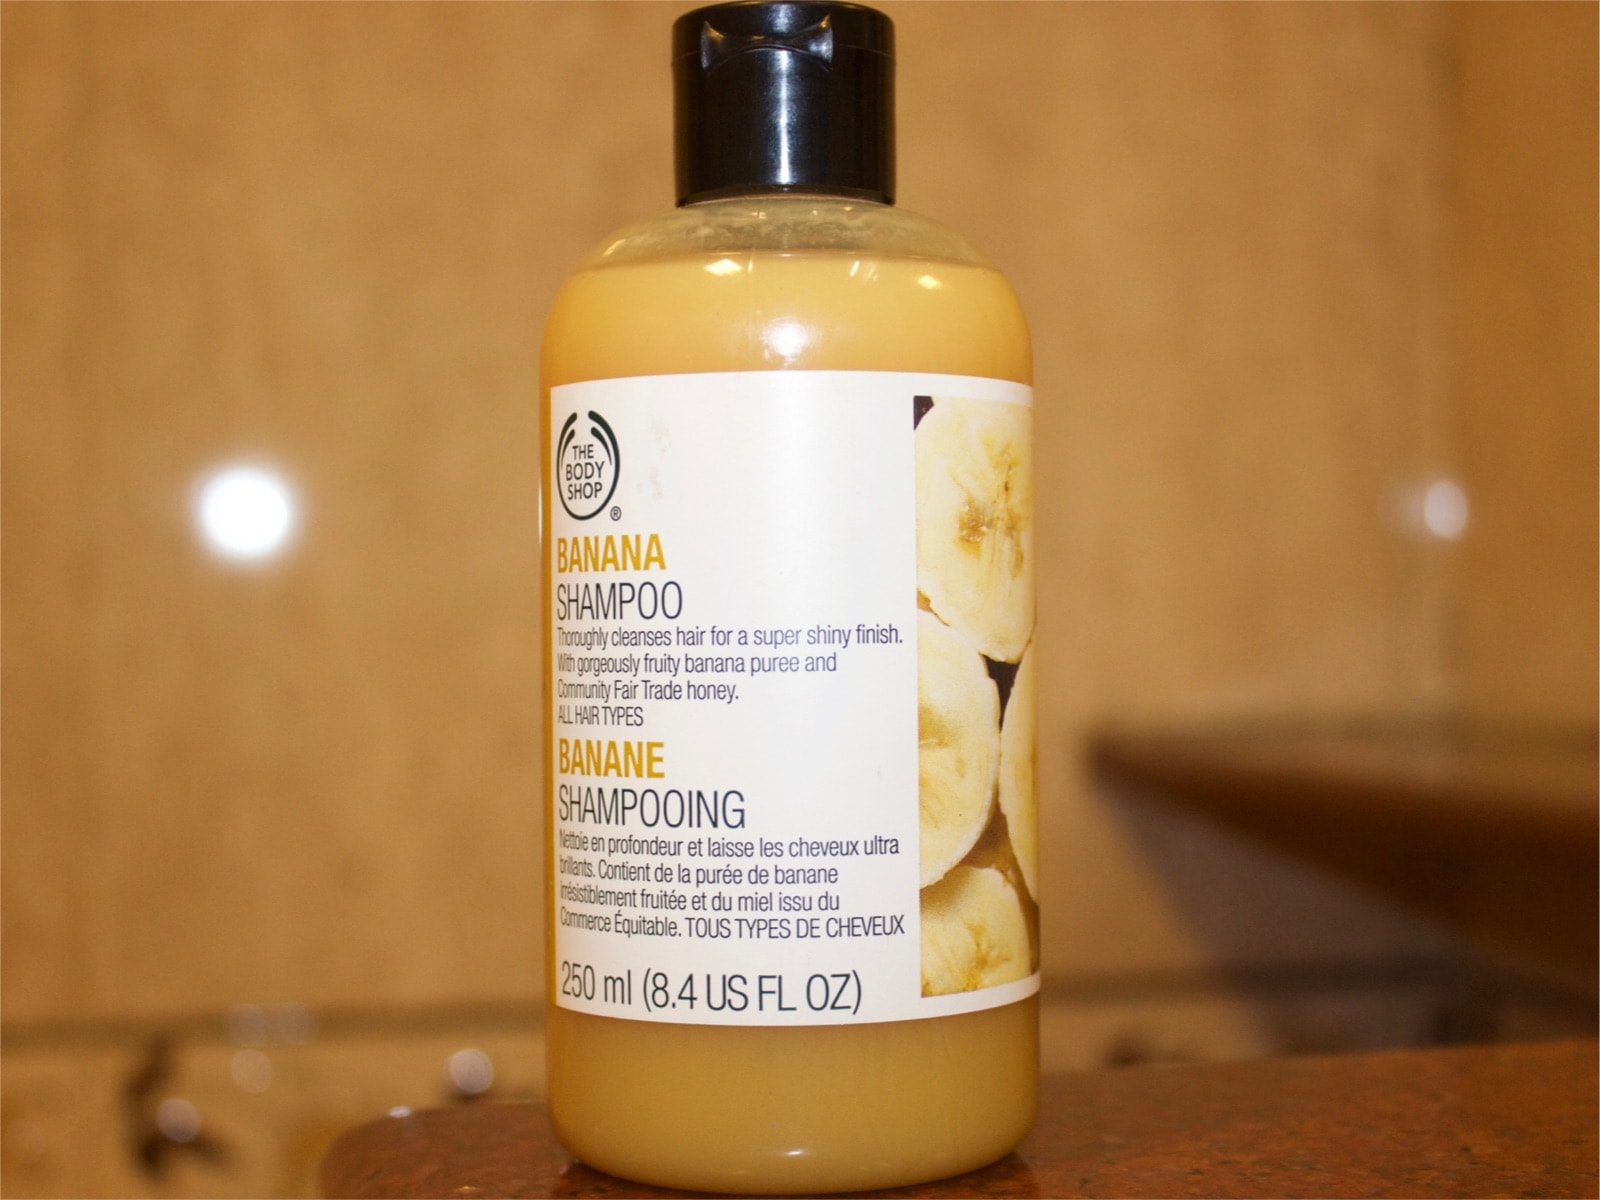 Odds Henfald Afdeling The Body Shop Banana Shampoo Review